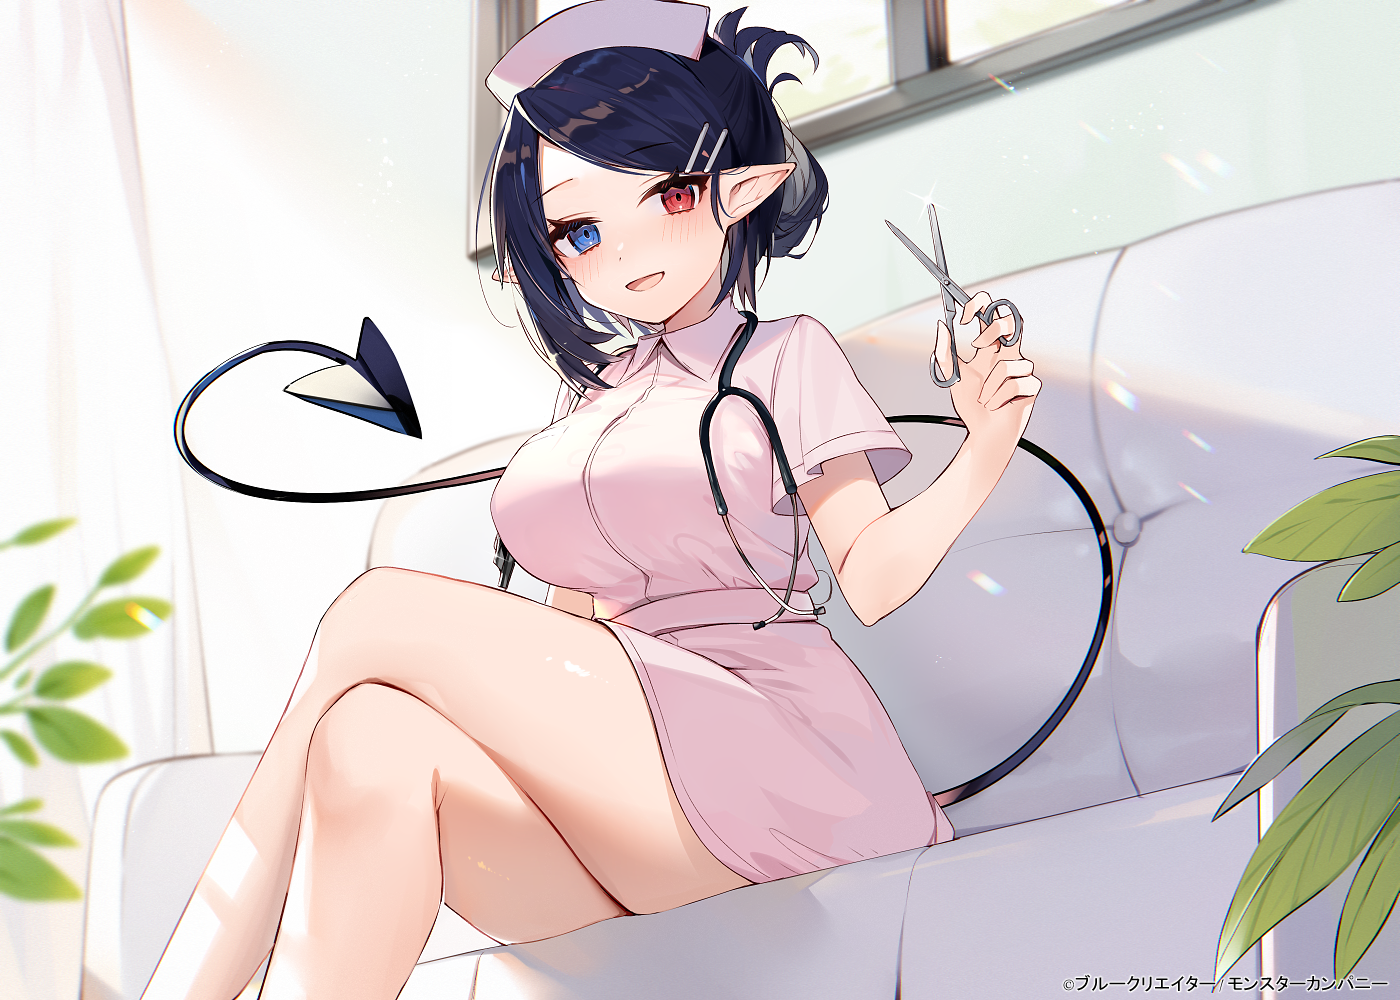 Anime 1400x1000 anime anime girls digital art artwork 2D portrait Muryotaro nurses nurse outfit pointy ears dark hair heterochromia tail